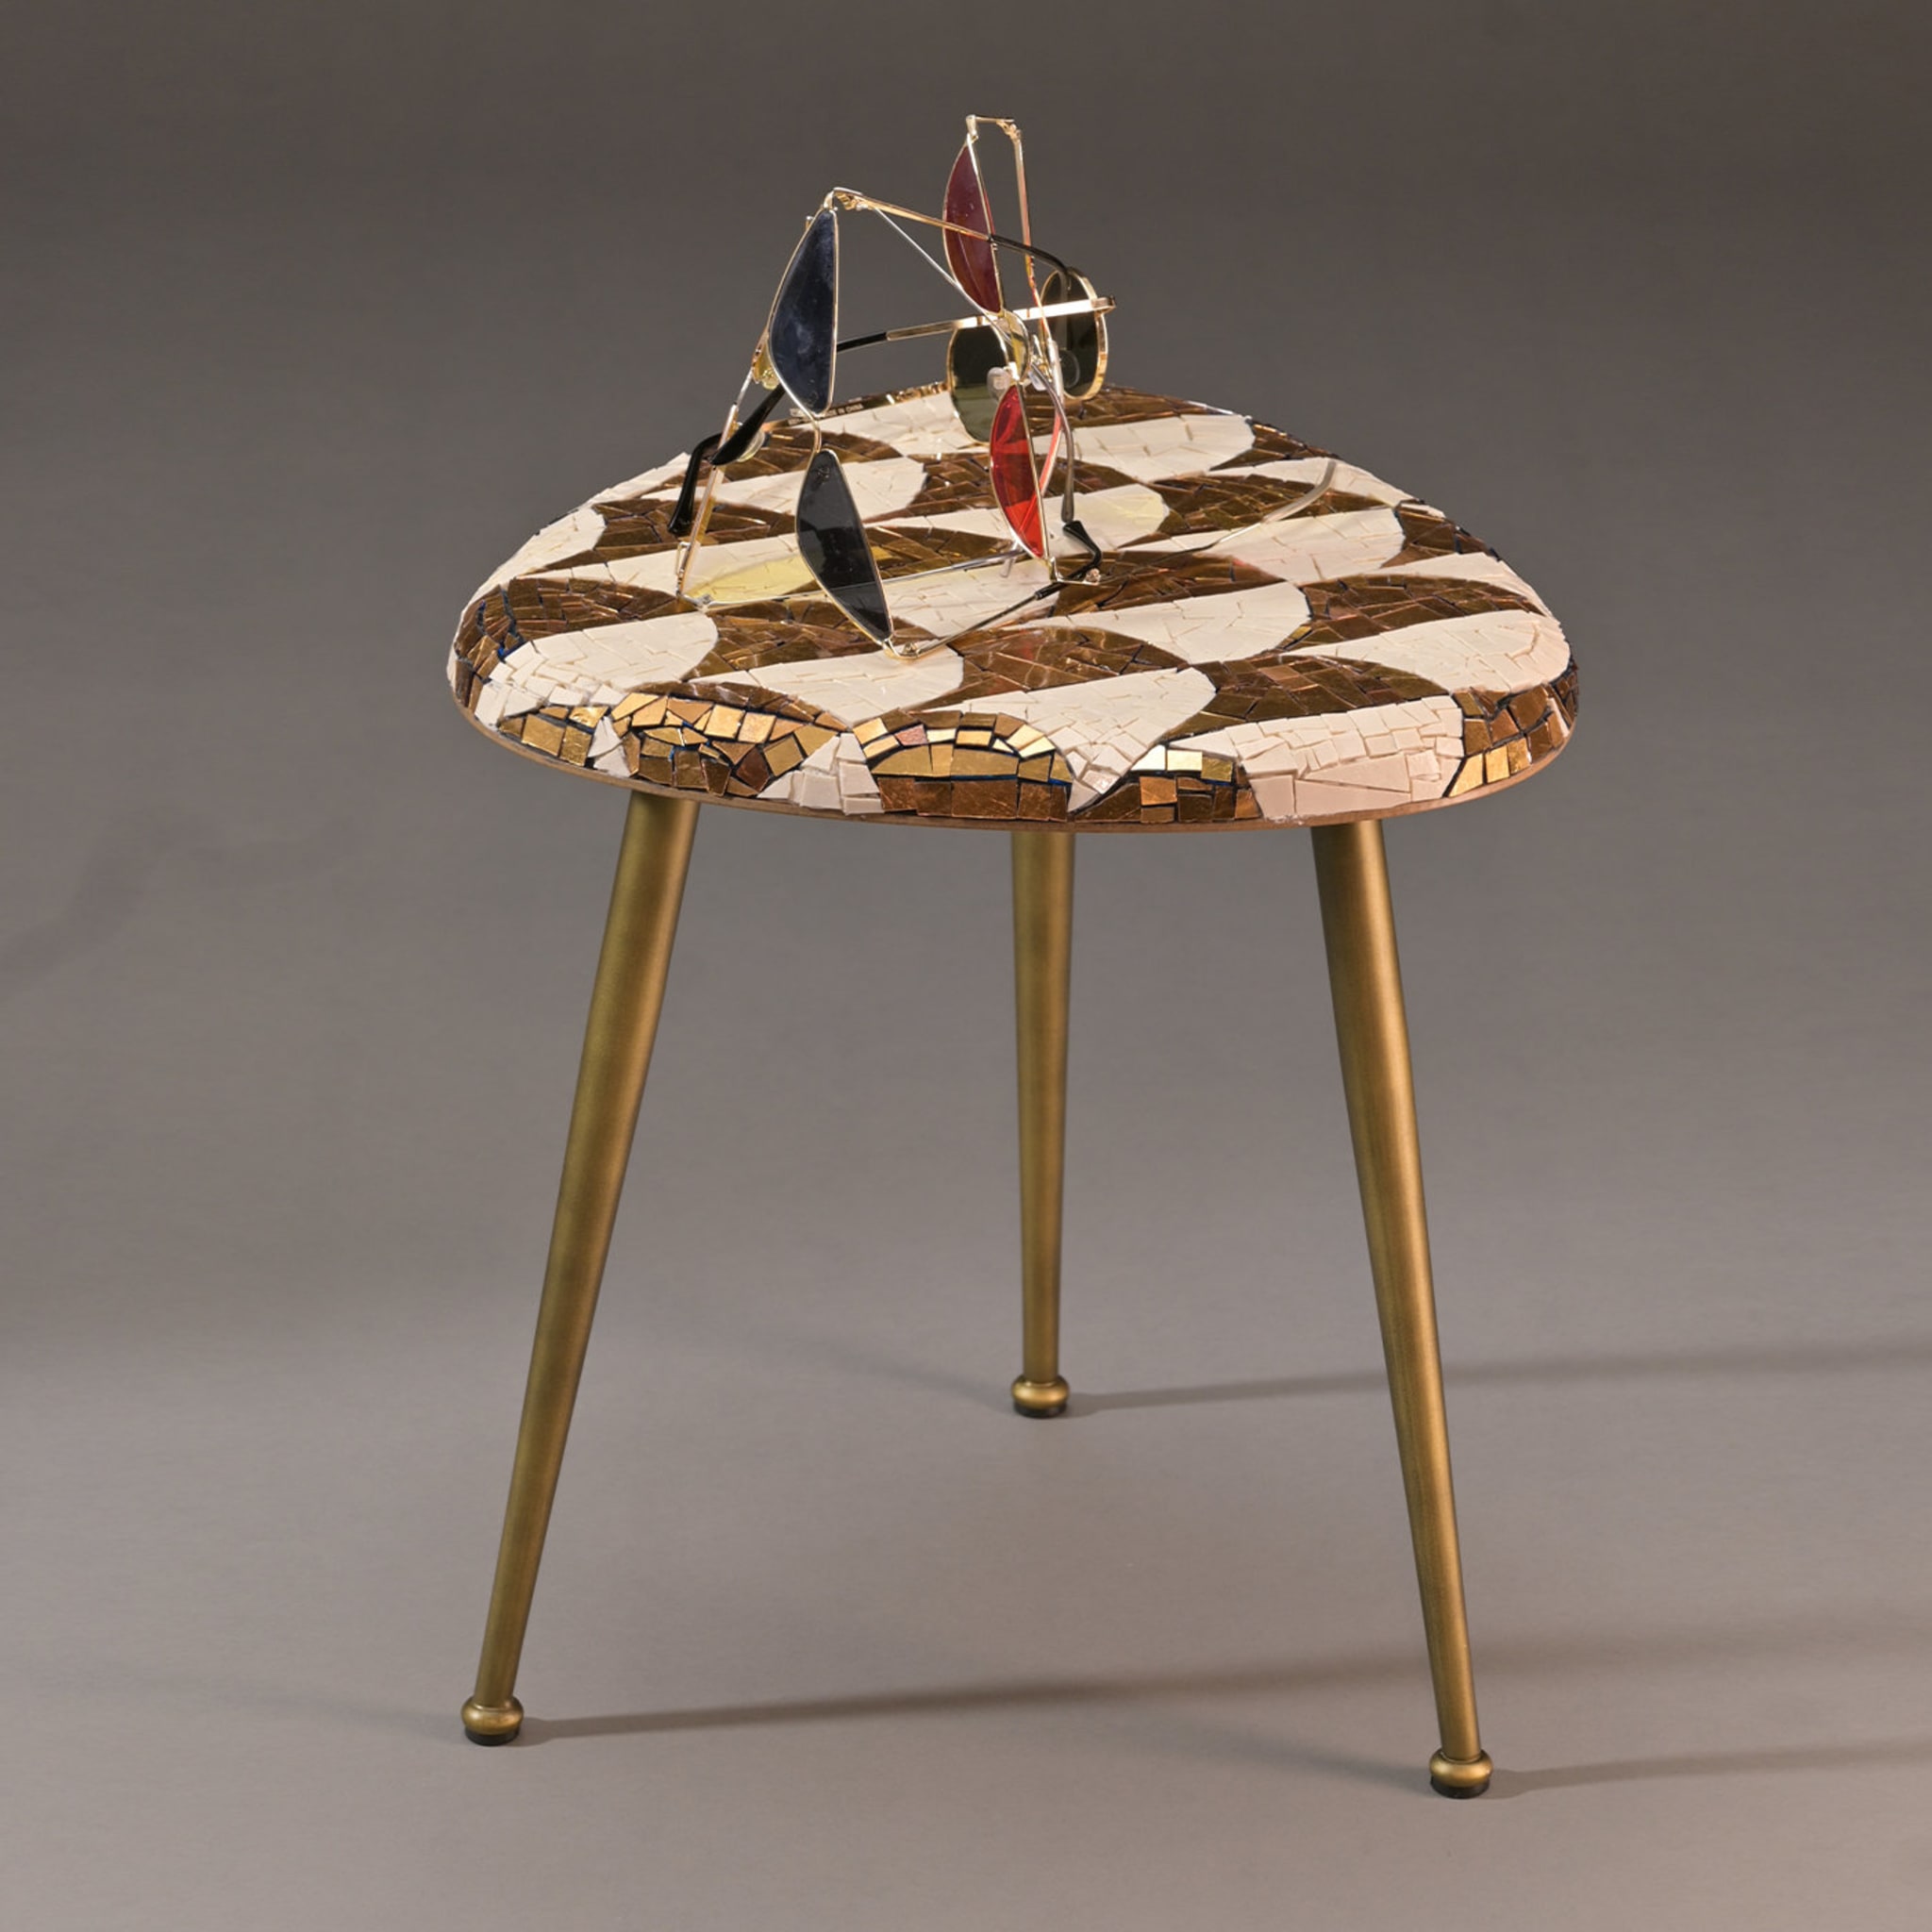 Casarialto Atelier Palmira coffee table by Michela Nardin - Alternative view 1